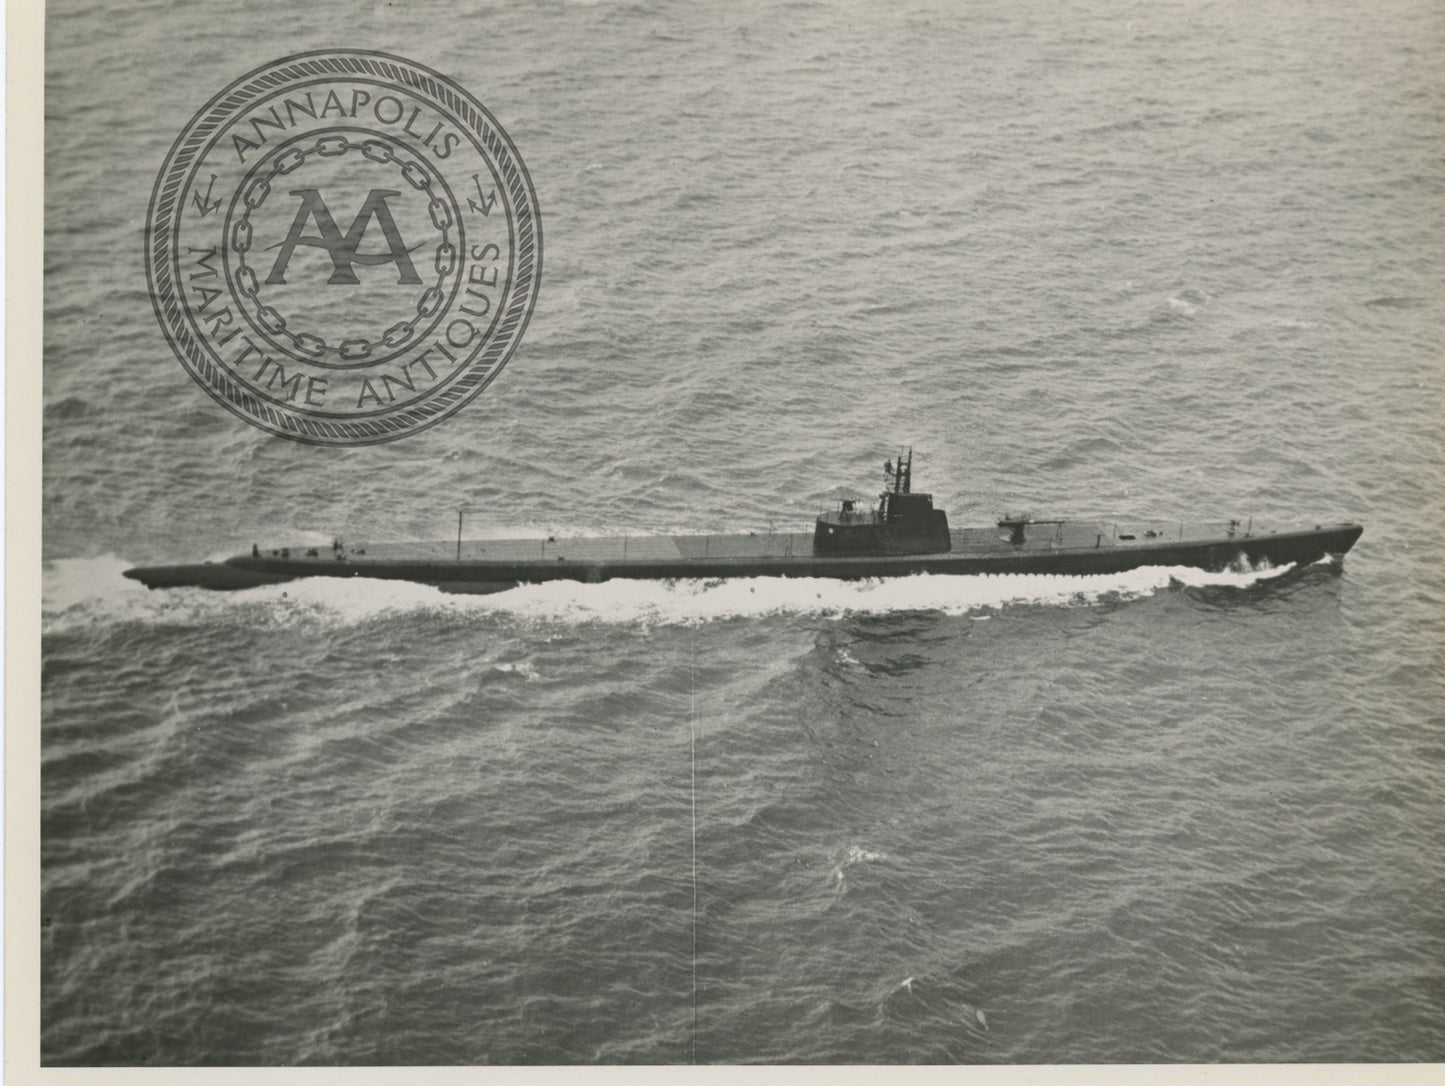 USS Robalo (SS-273) Submarine